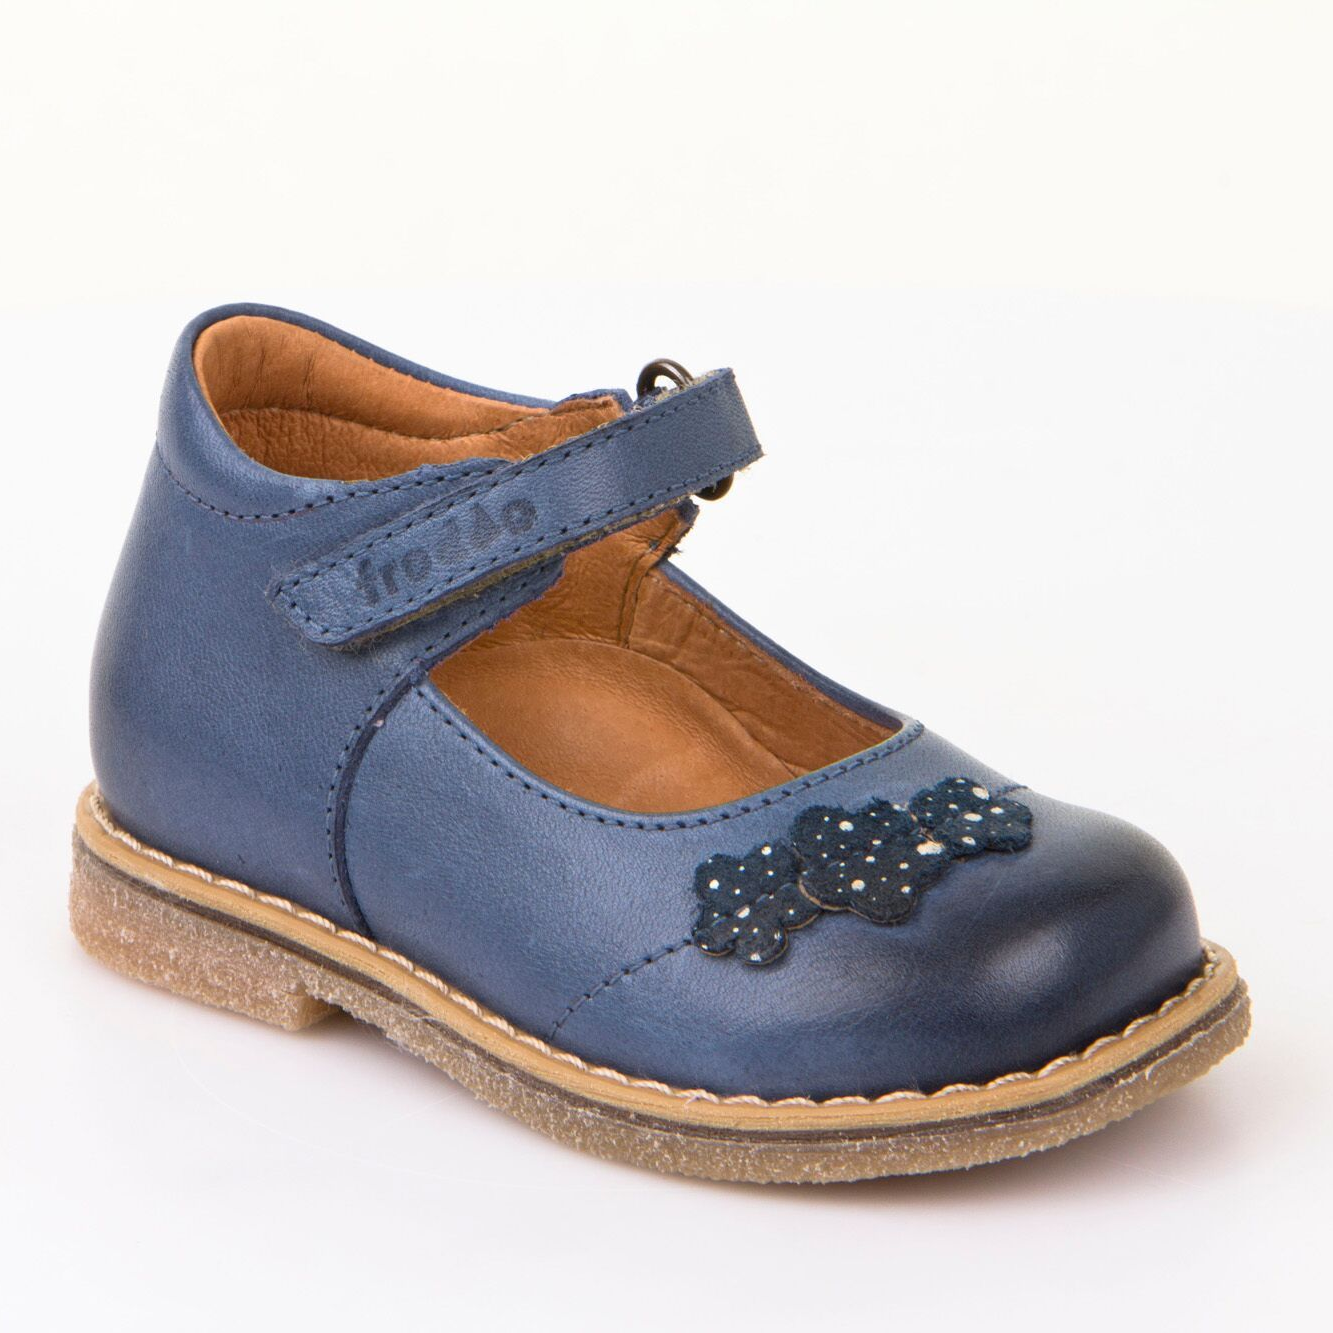 Froddo Infant Childrens Mary Jane G2140033-1 Leather Shoes Denim Blue